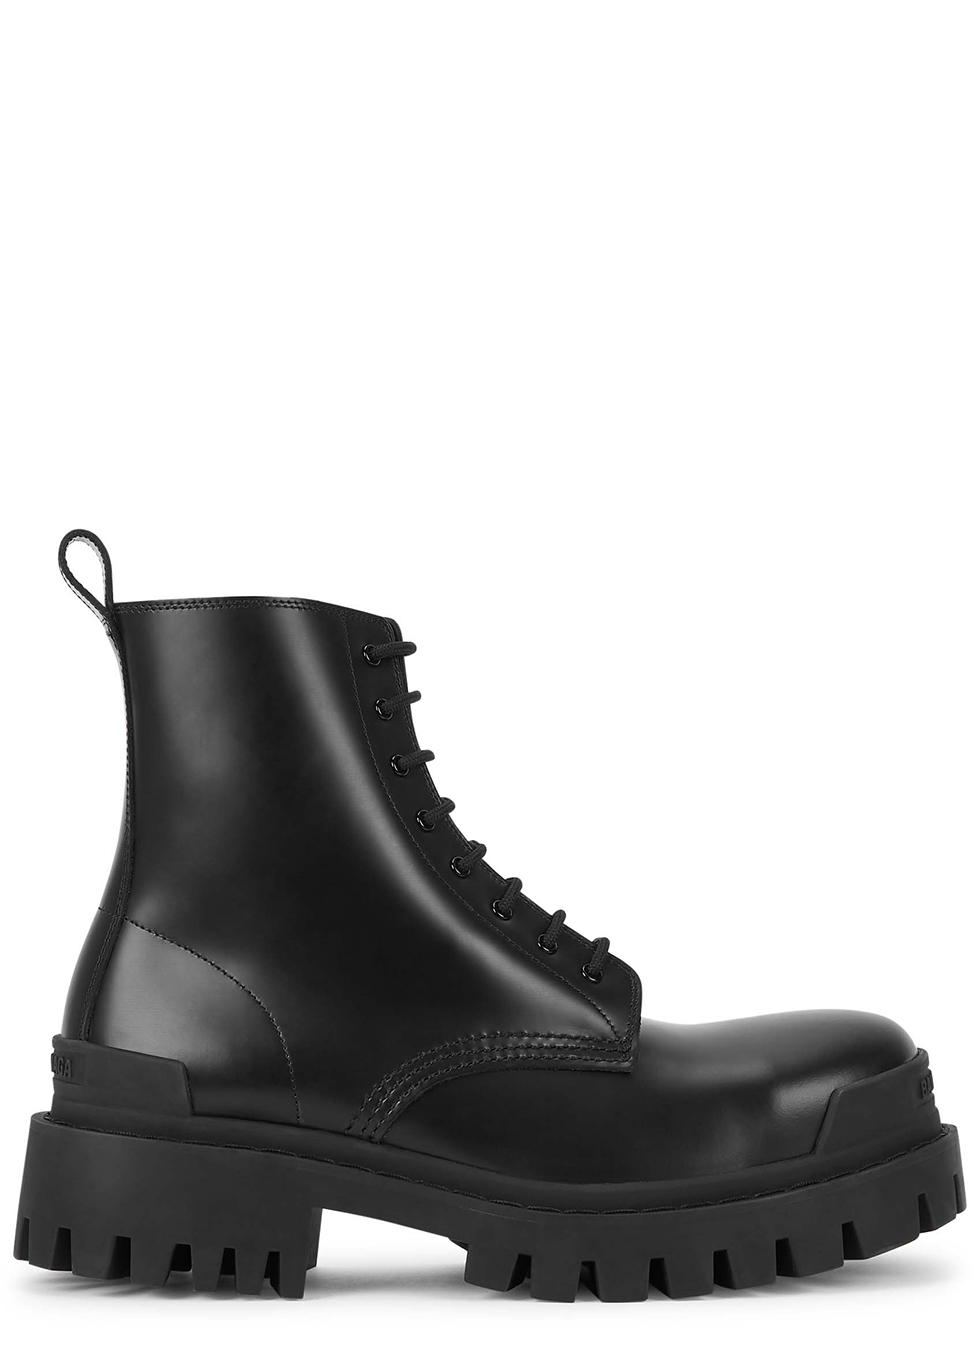 Balenciaga Strike 50 black leather ankle boots - Harvey Nichols